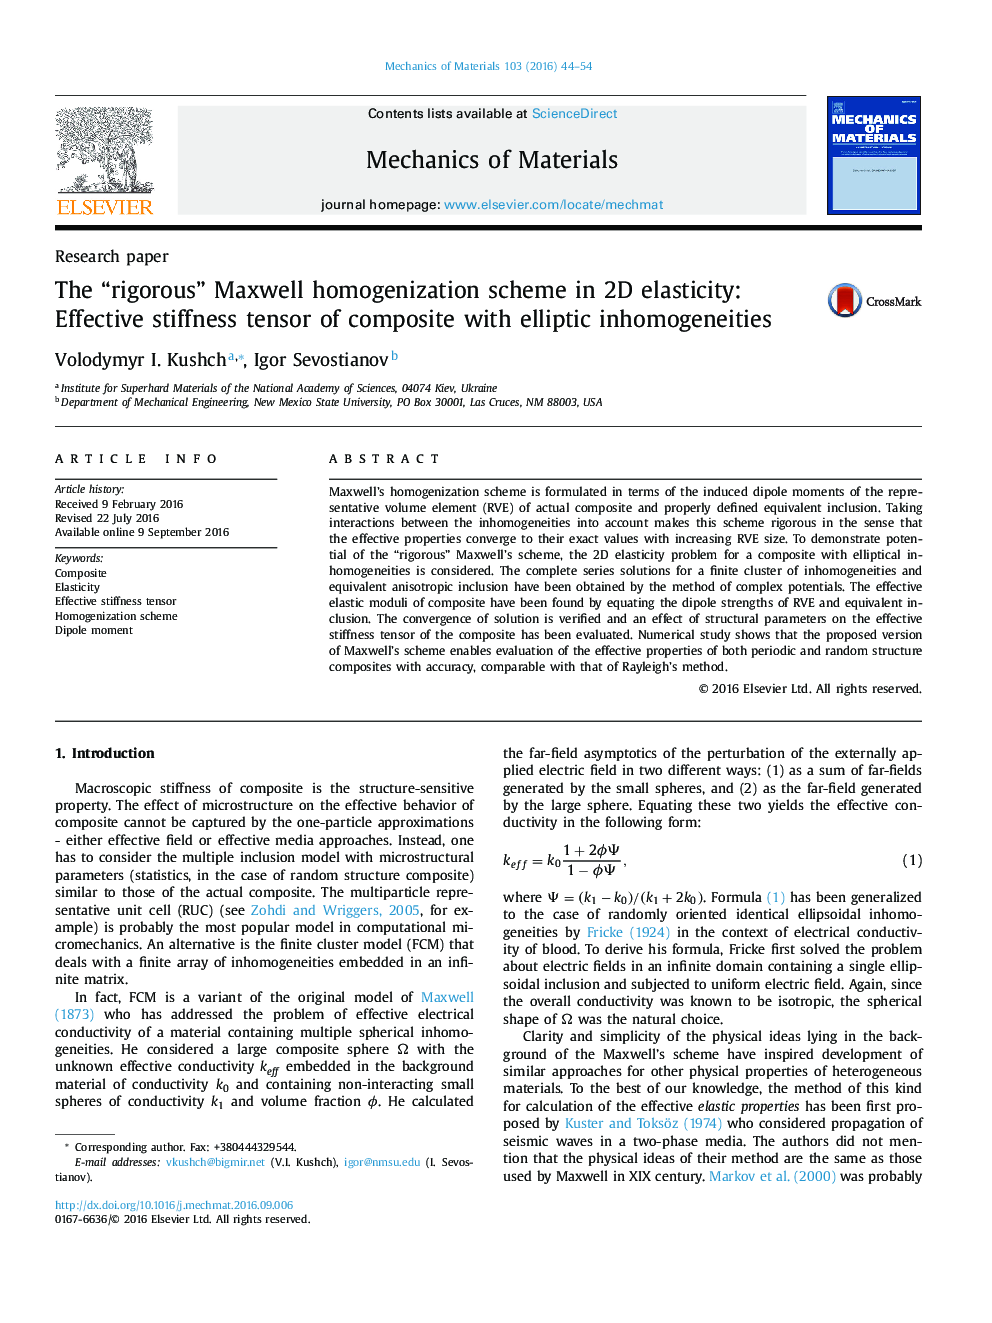 Research paperThe “rigorous” Maxwell homogenization scheme in 2D elasticity: Effective stiffness tensor of composite with elliptic inhomogeneities